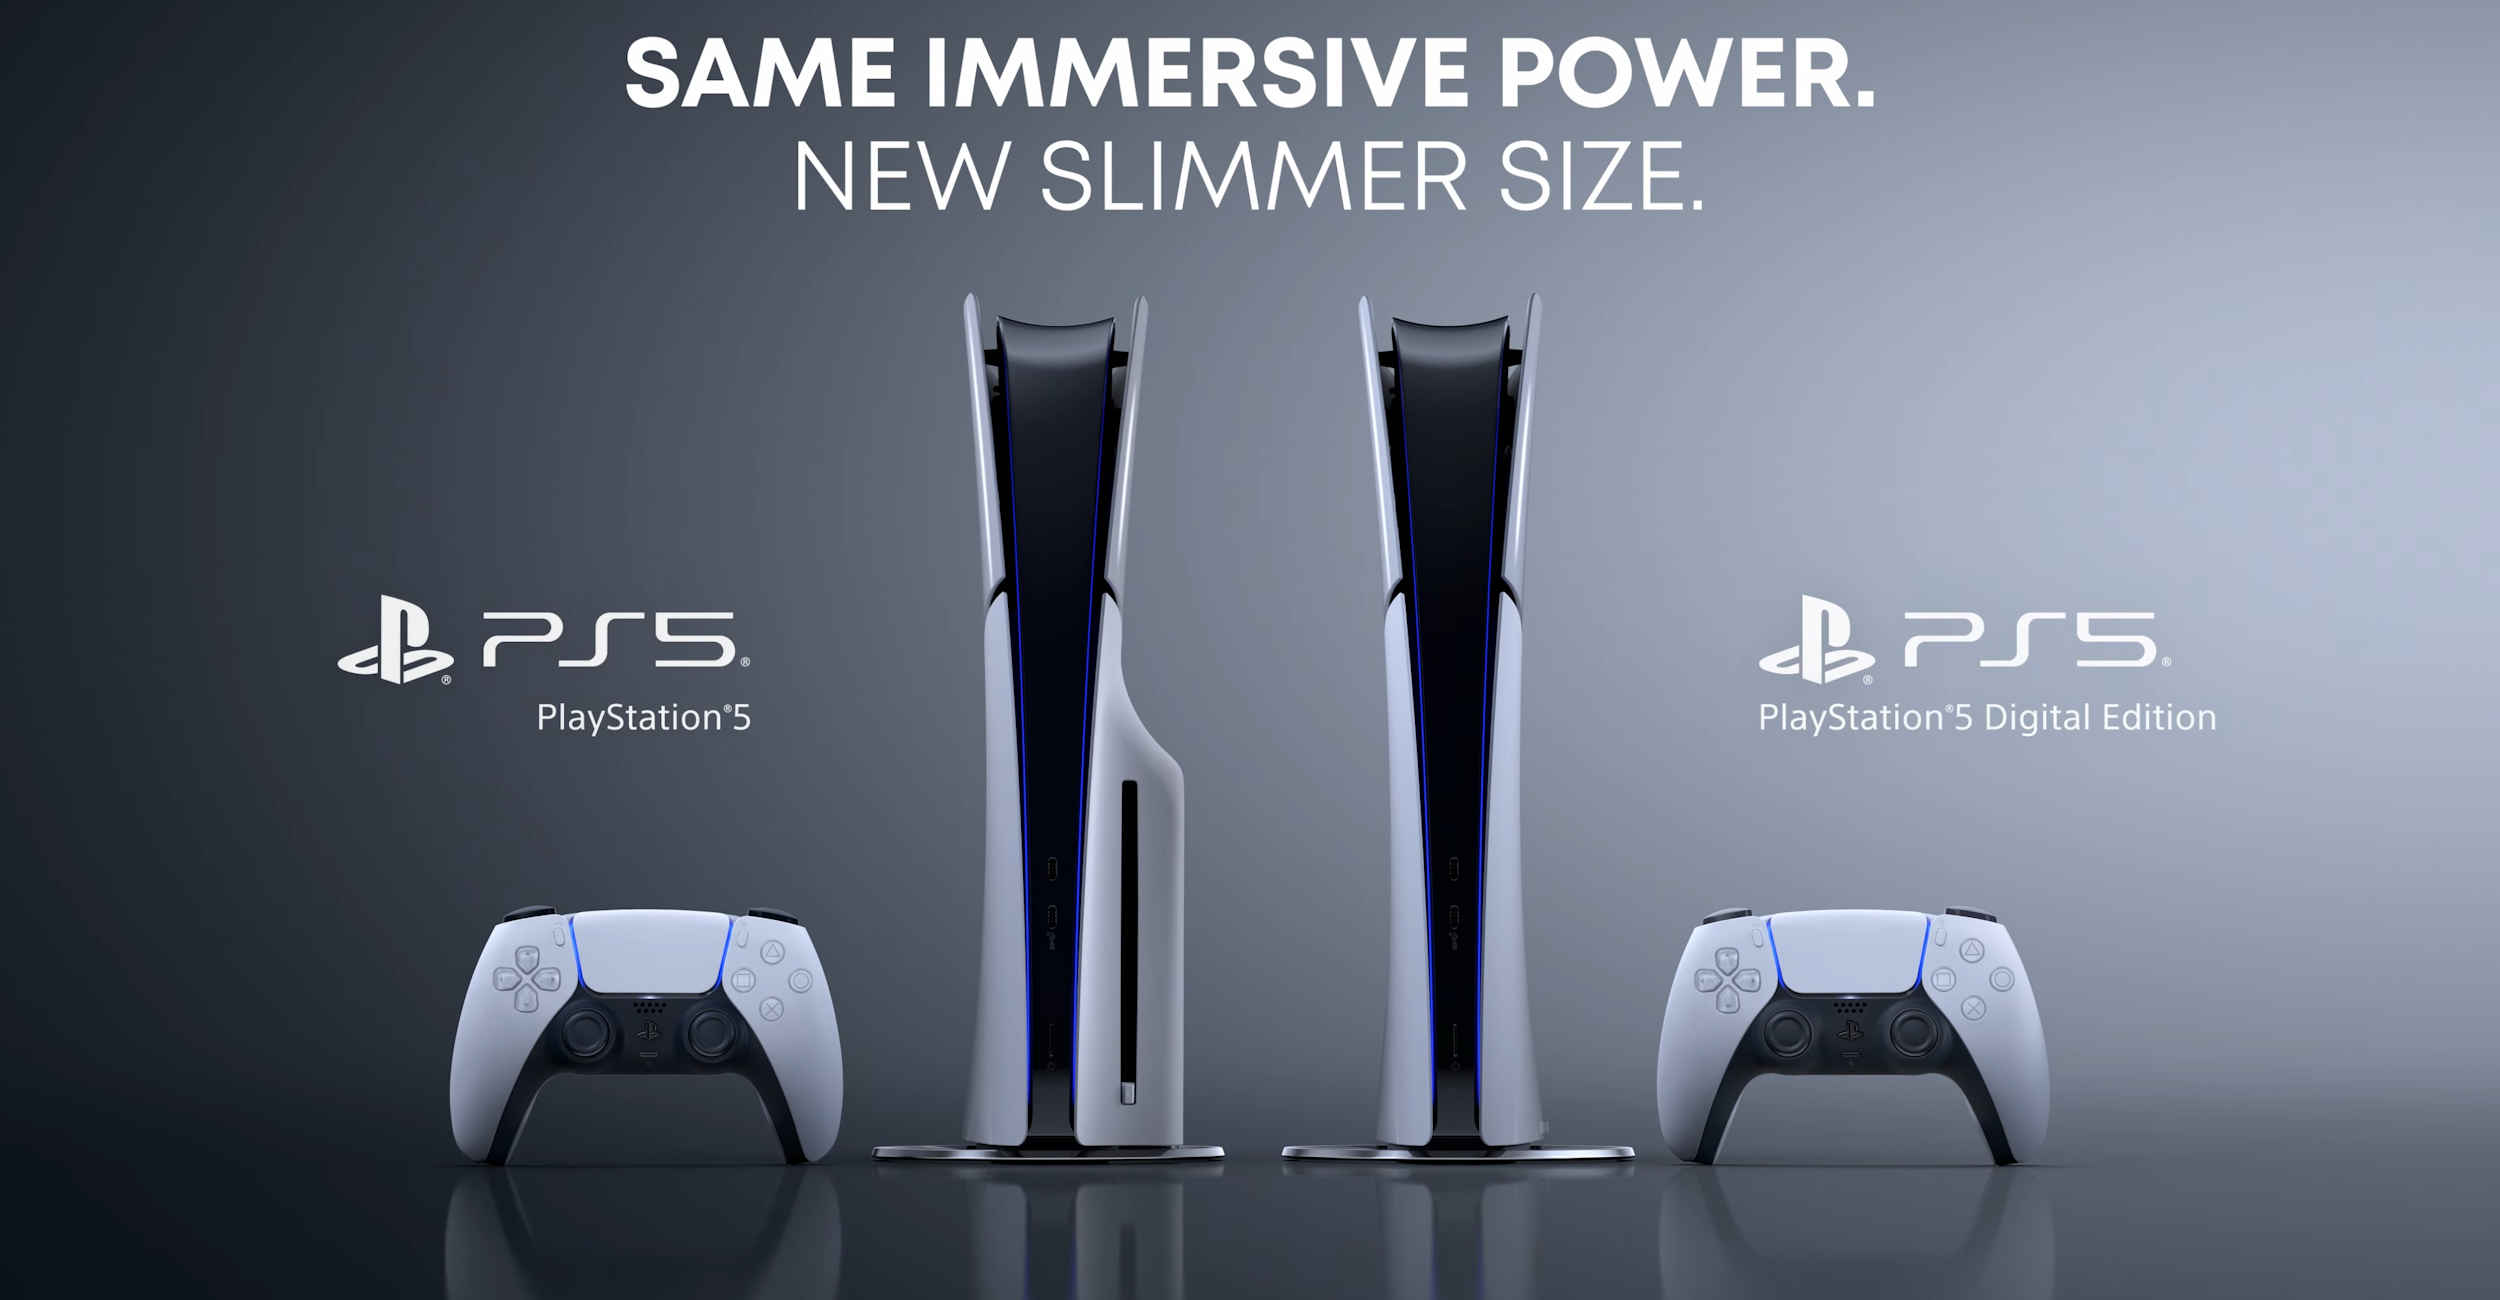 Sony announces slimmer PlayStation 5 consoles - VideoCardz.com